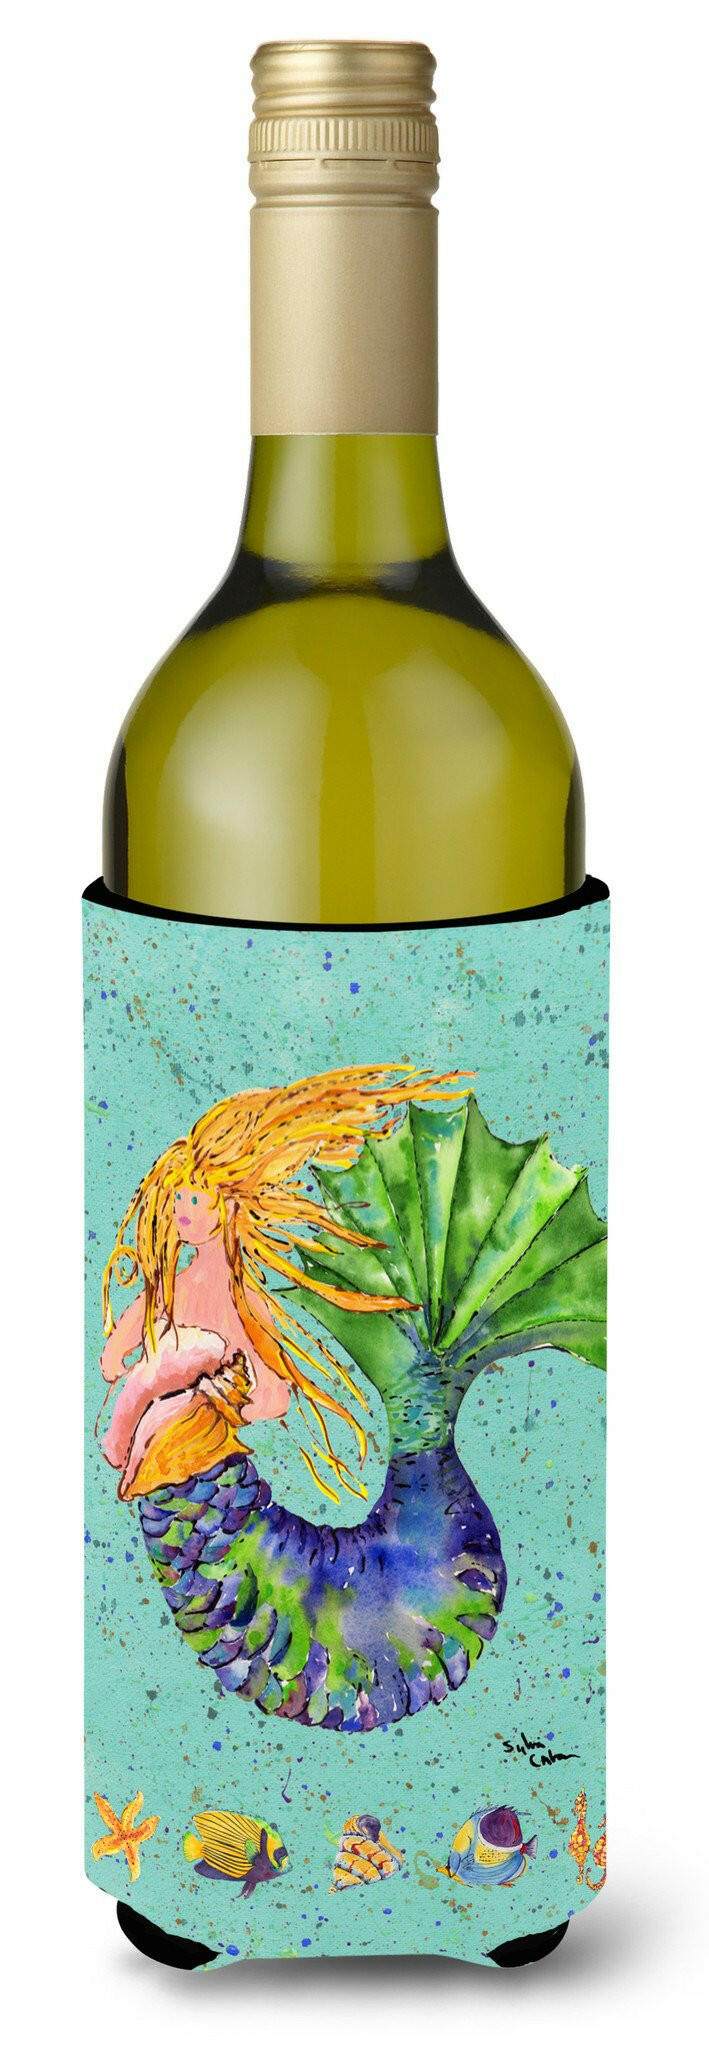 Blonde Mermaid on Teal Wine Bottle Beverage Insulator Beverage Insulator Hugger by Caroline's Treasures